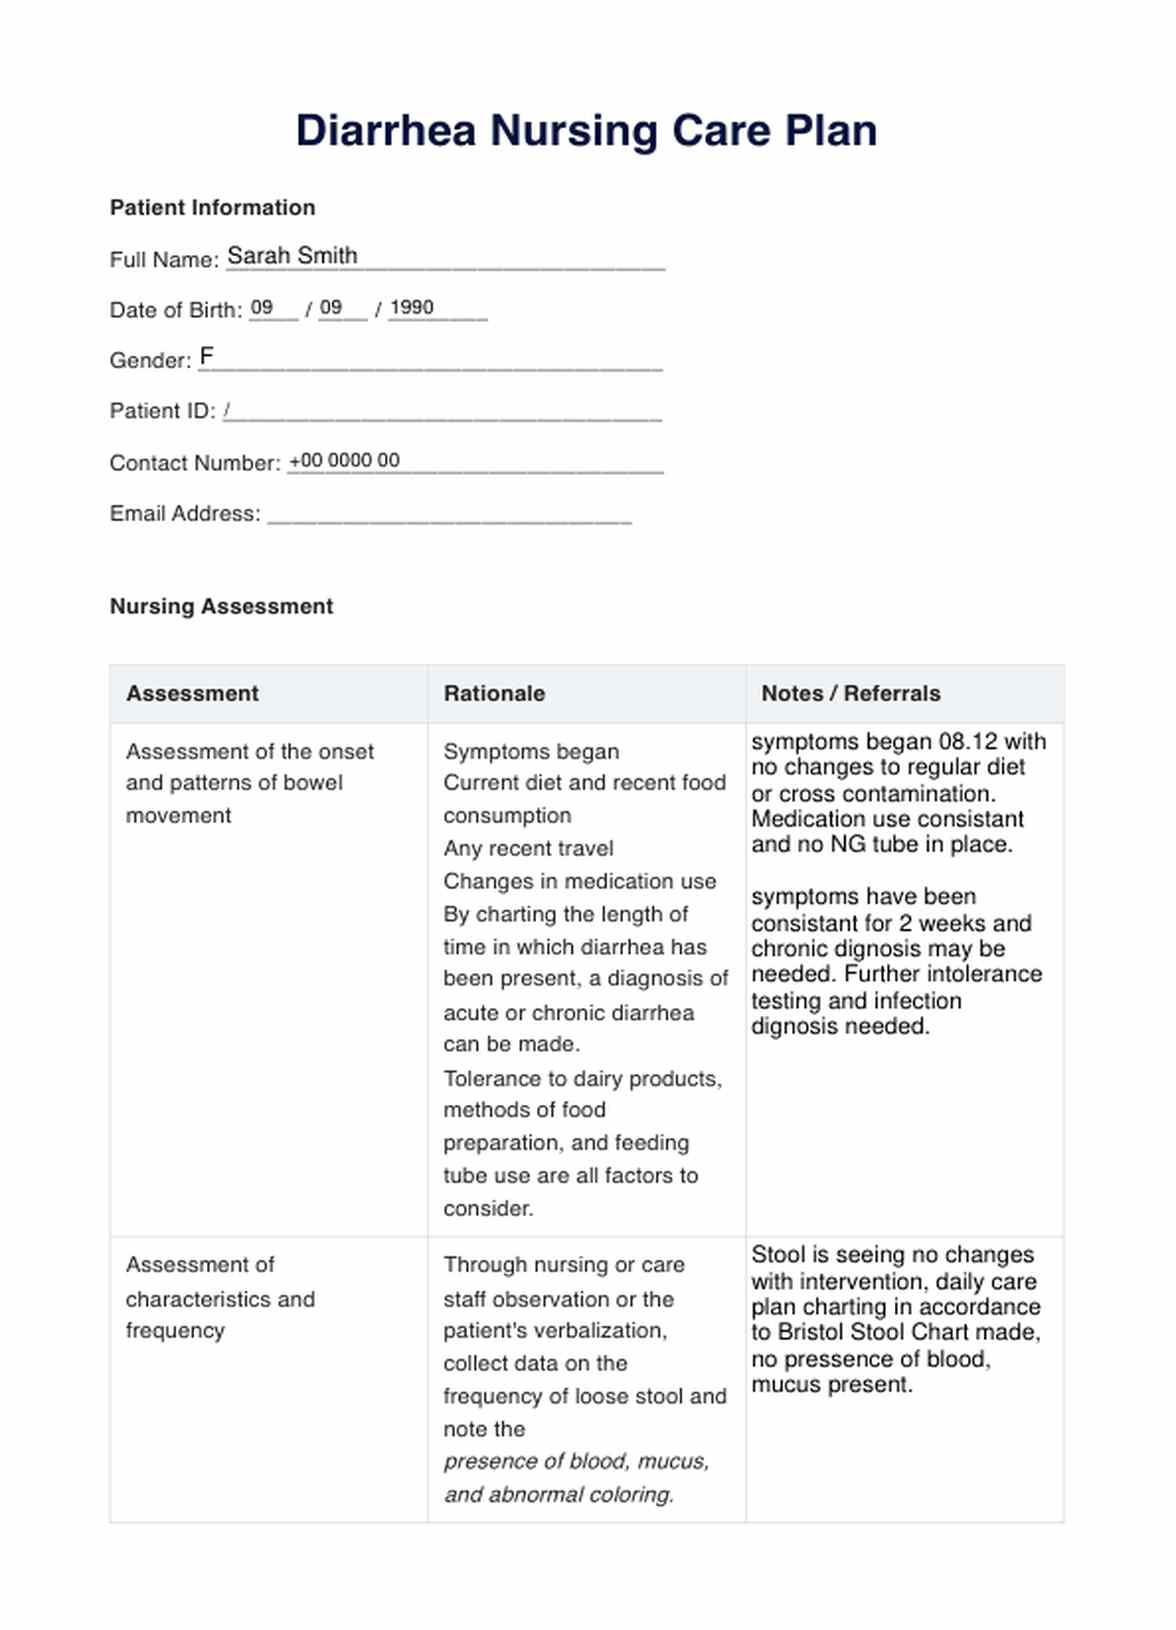 Diarrhea Nursing Care Plan PDF Example